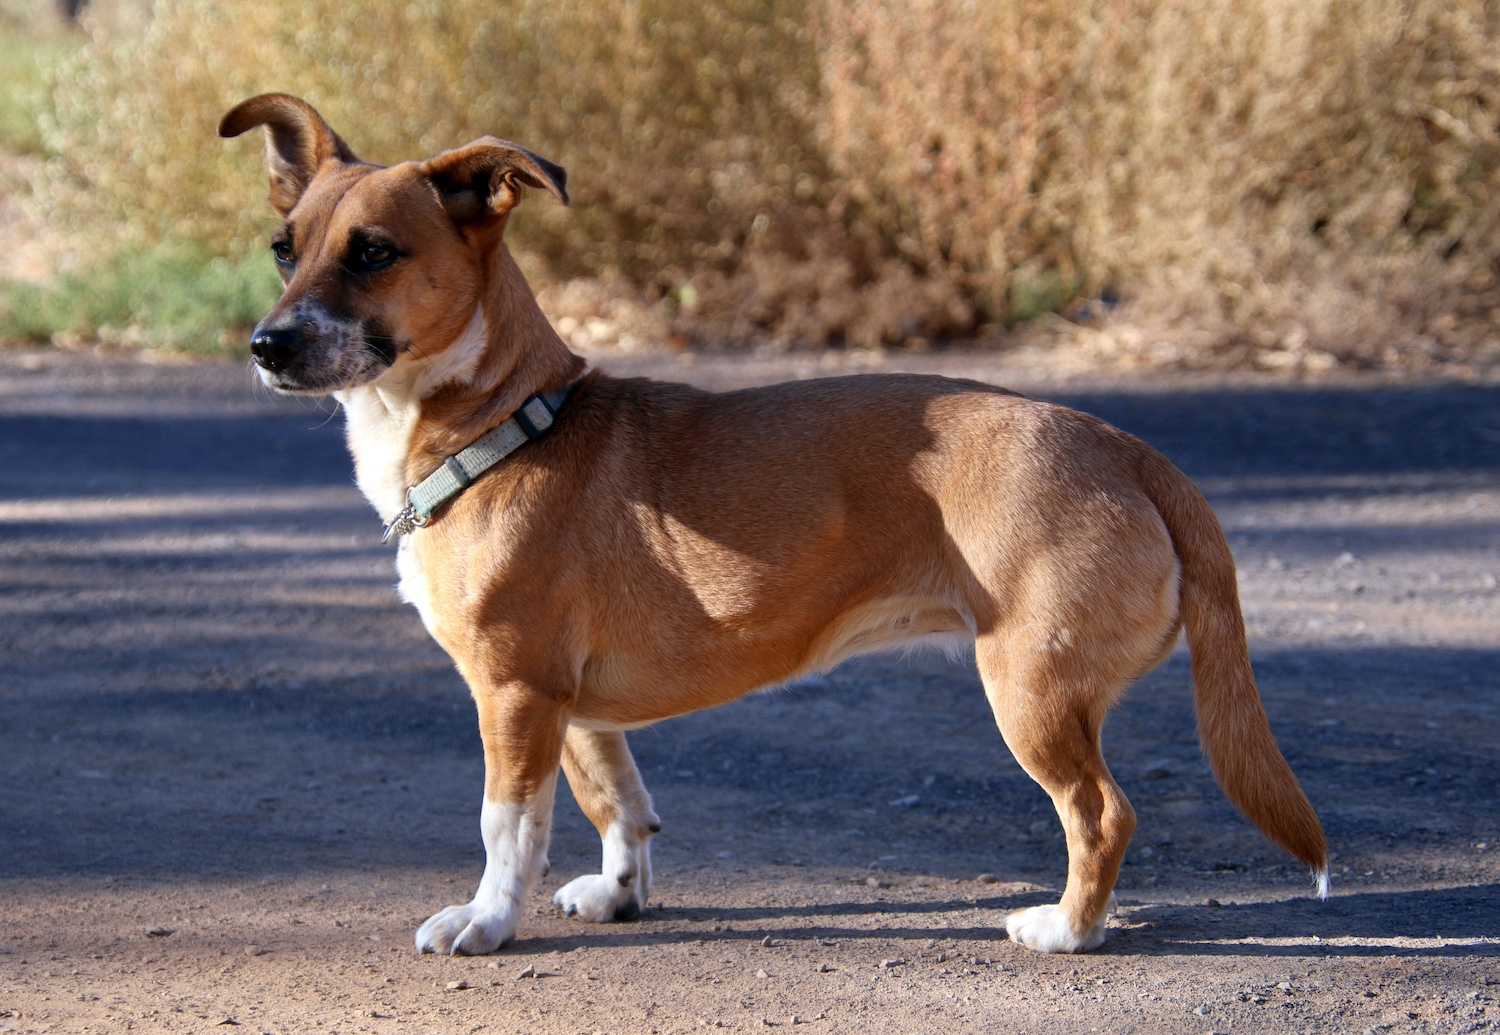 A three-legged dog in profile.